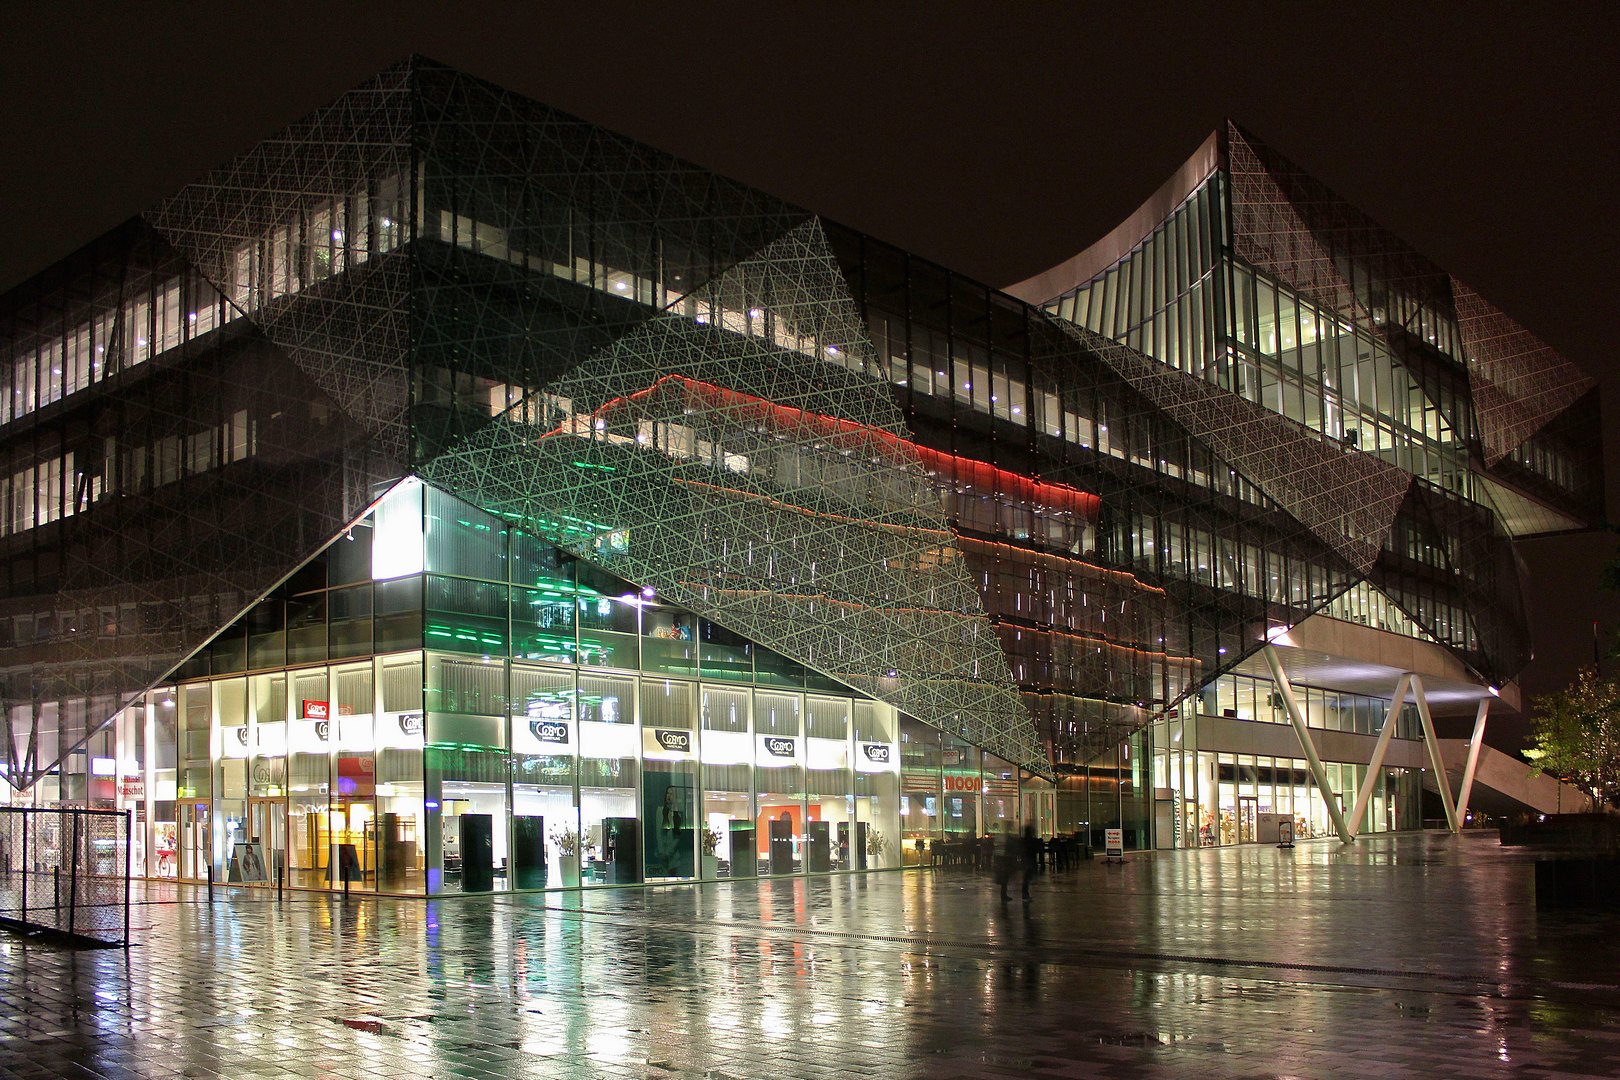 City Hall of Nieuwegein at a rainy evening